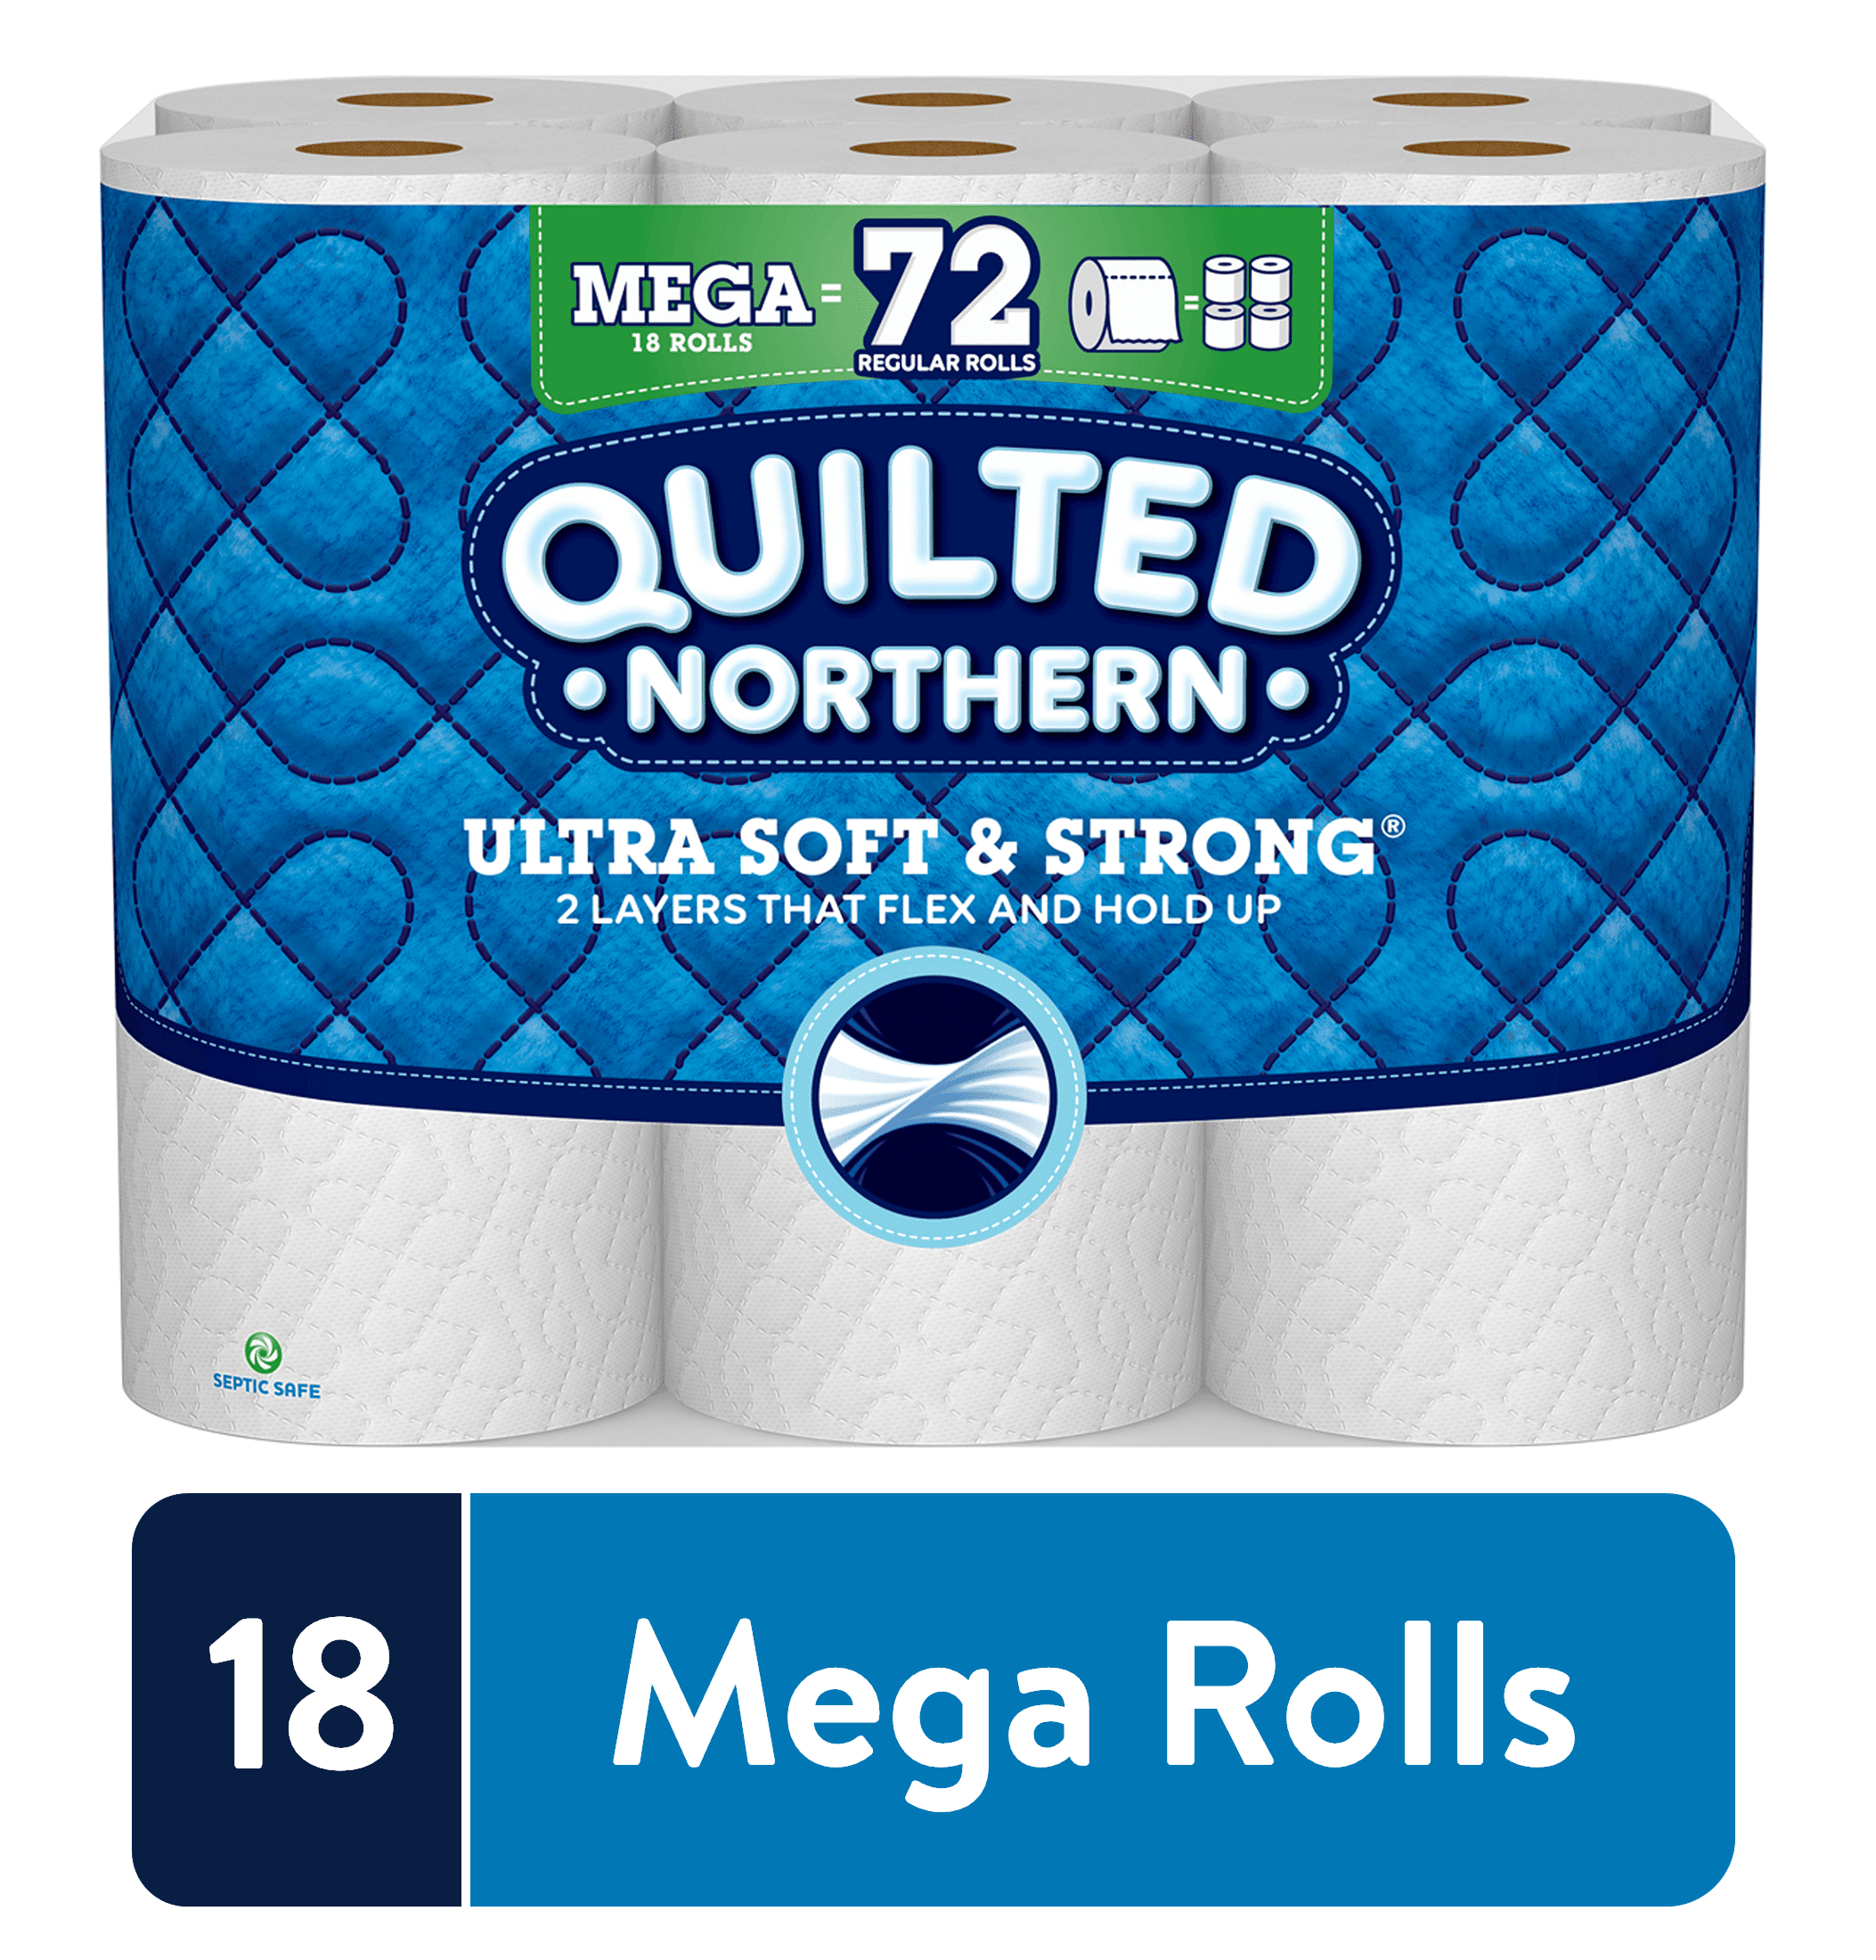 Blanko Super Extra soft 8 Mega Rolls = 16 Regular Rolls Toilet Paper 